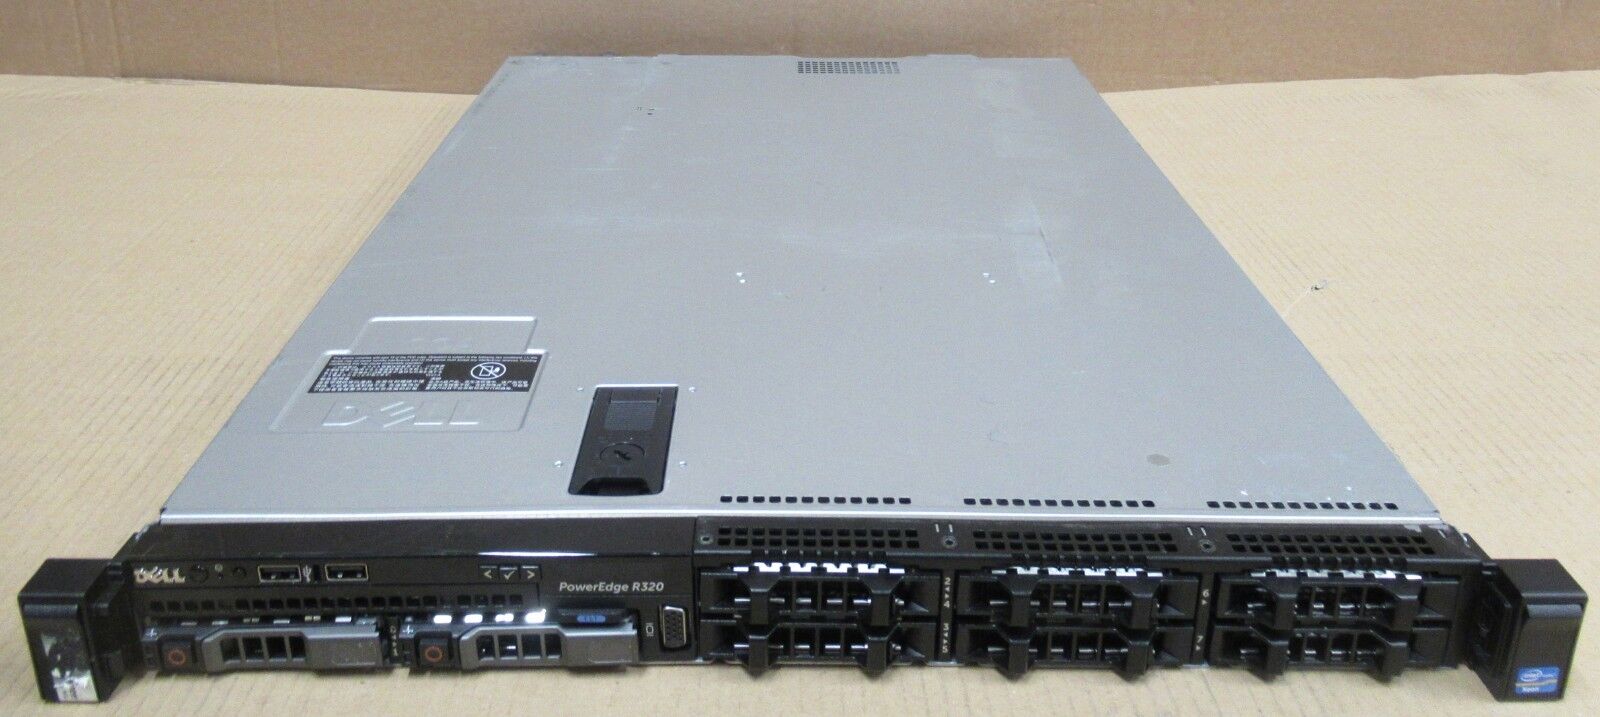 Dell PowerEdge R320 Six-Core E5-2430 2.20GHz 24GB Ram 2x 300GB HDD 1U Server